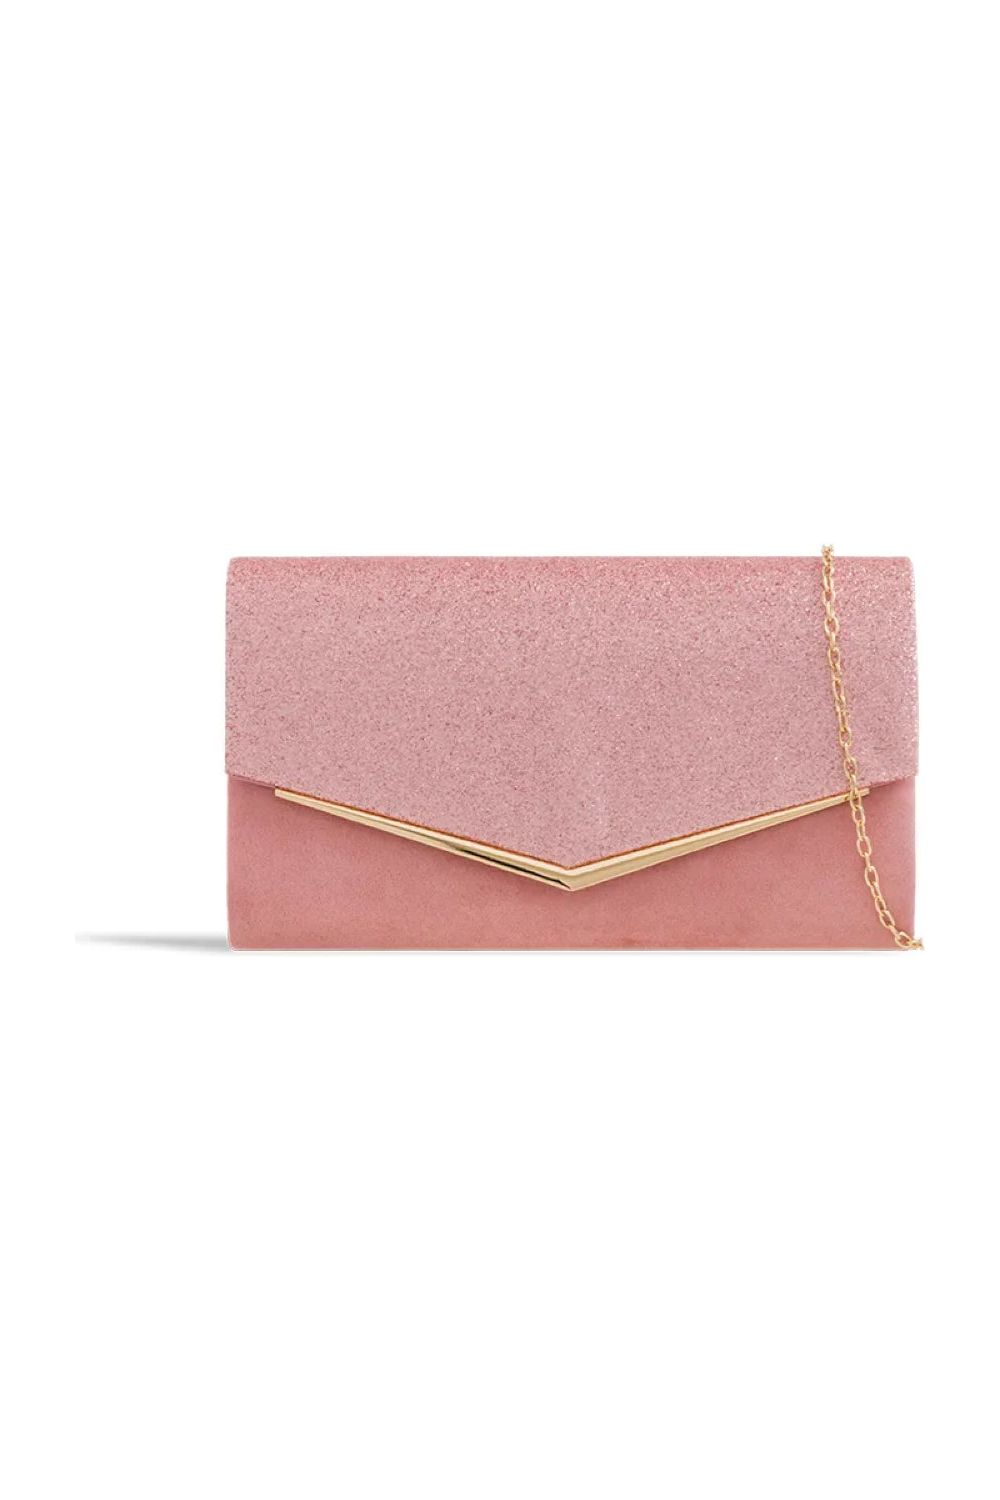 Blush Glitter Envelope Clutch Bag ALH2348